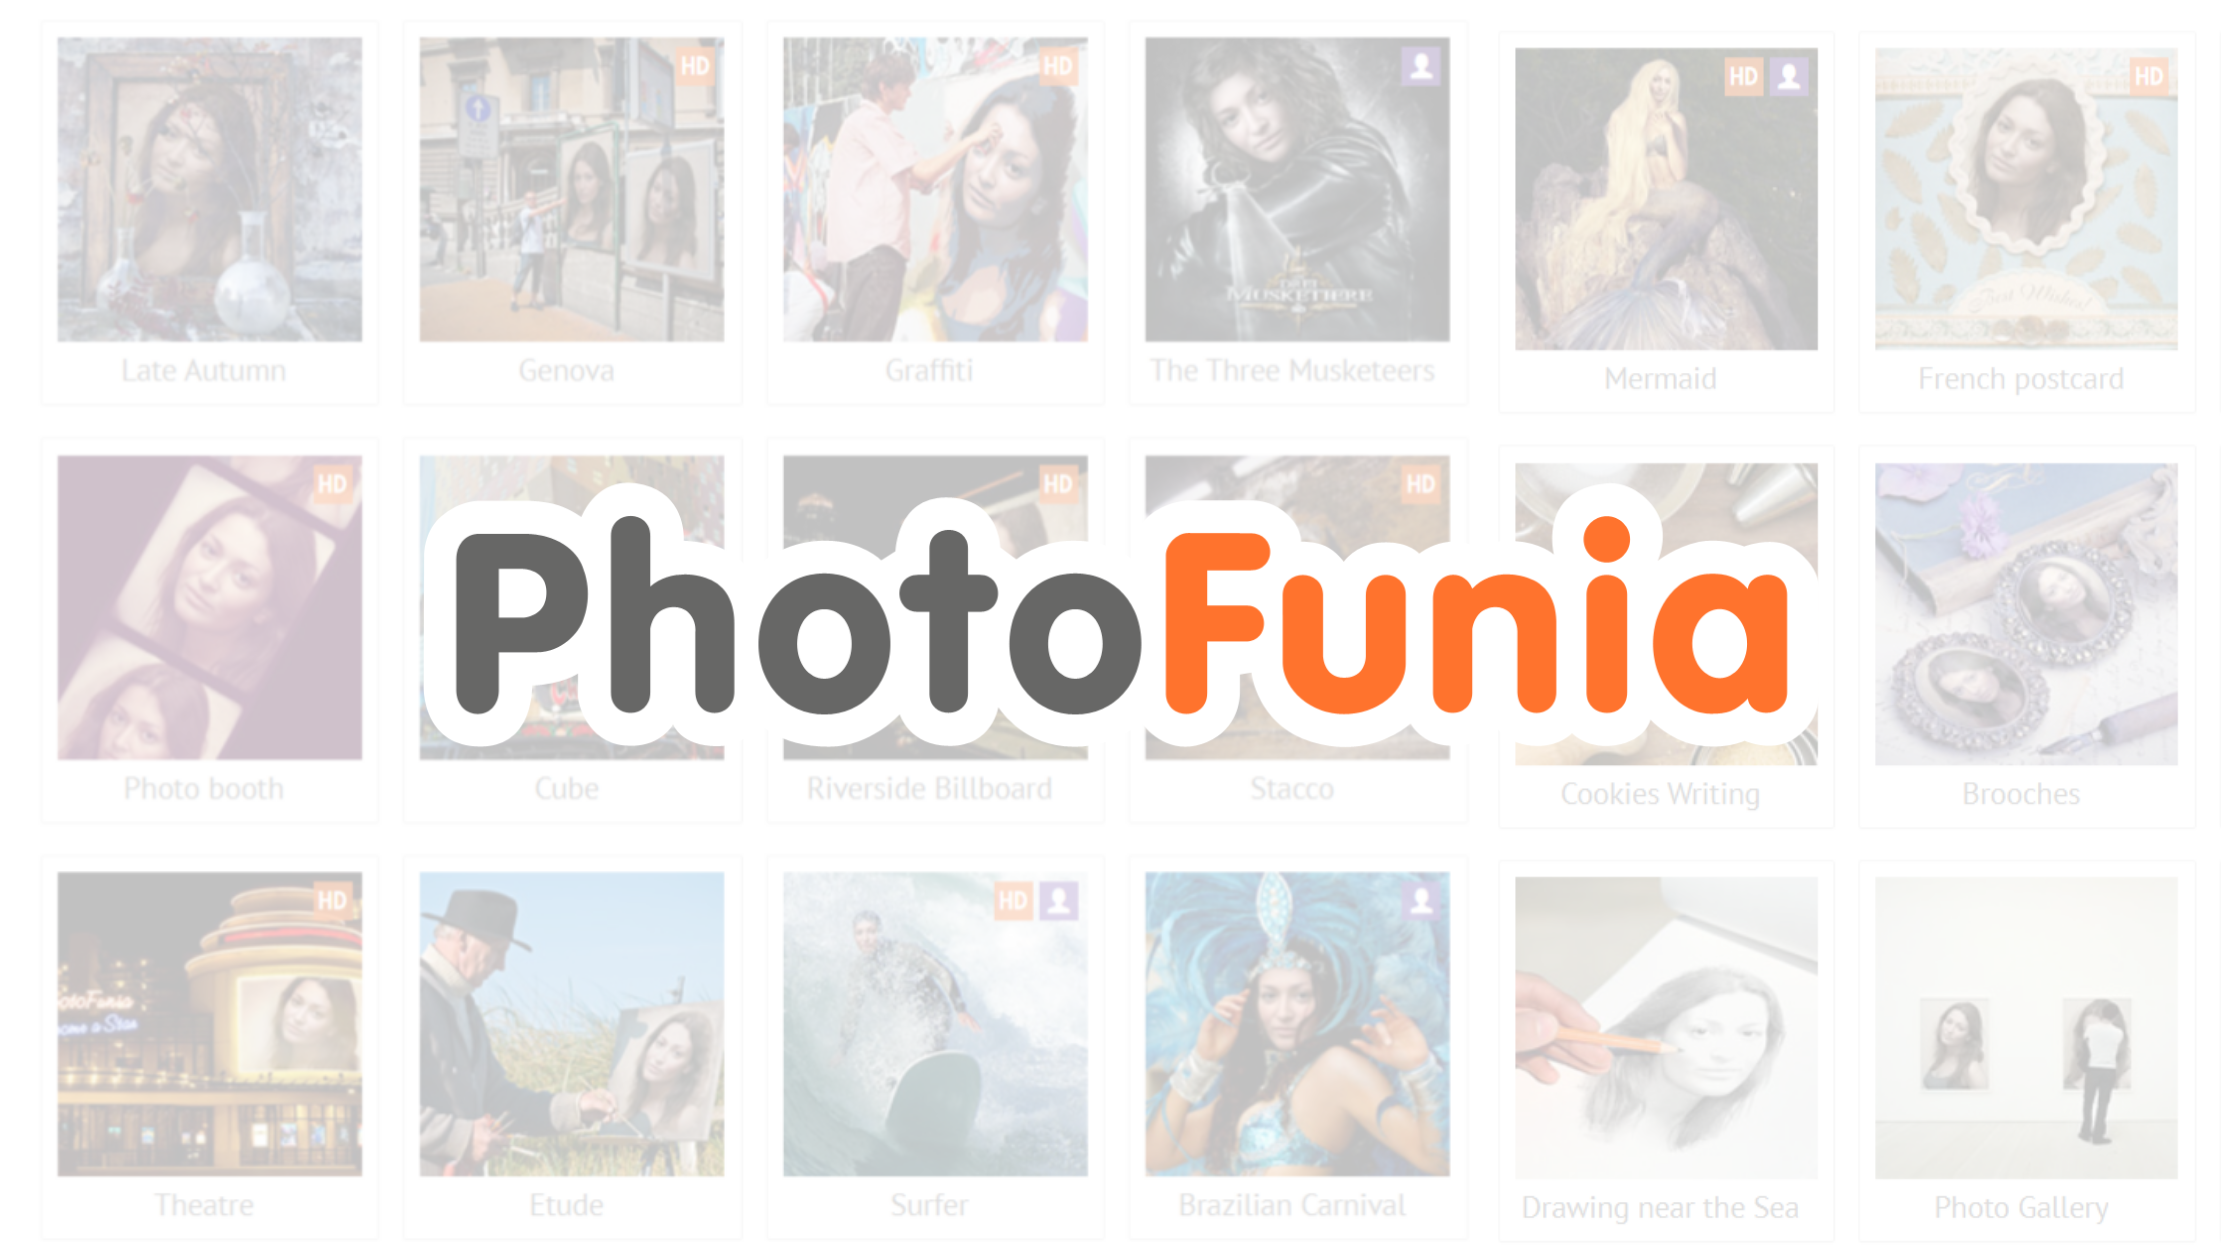 30+) Website Like Photofunia For Free (Full Details)